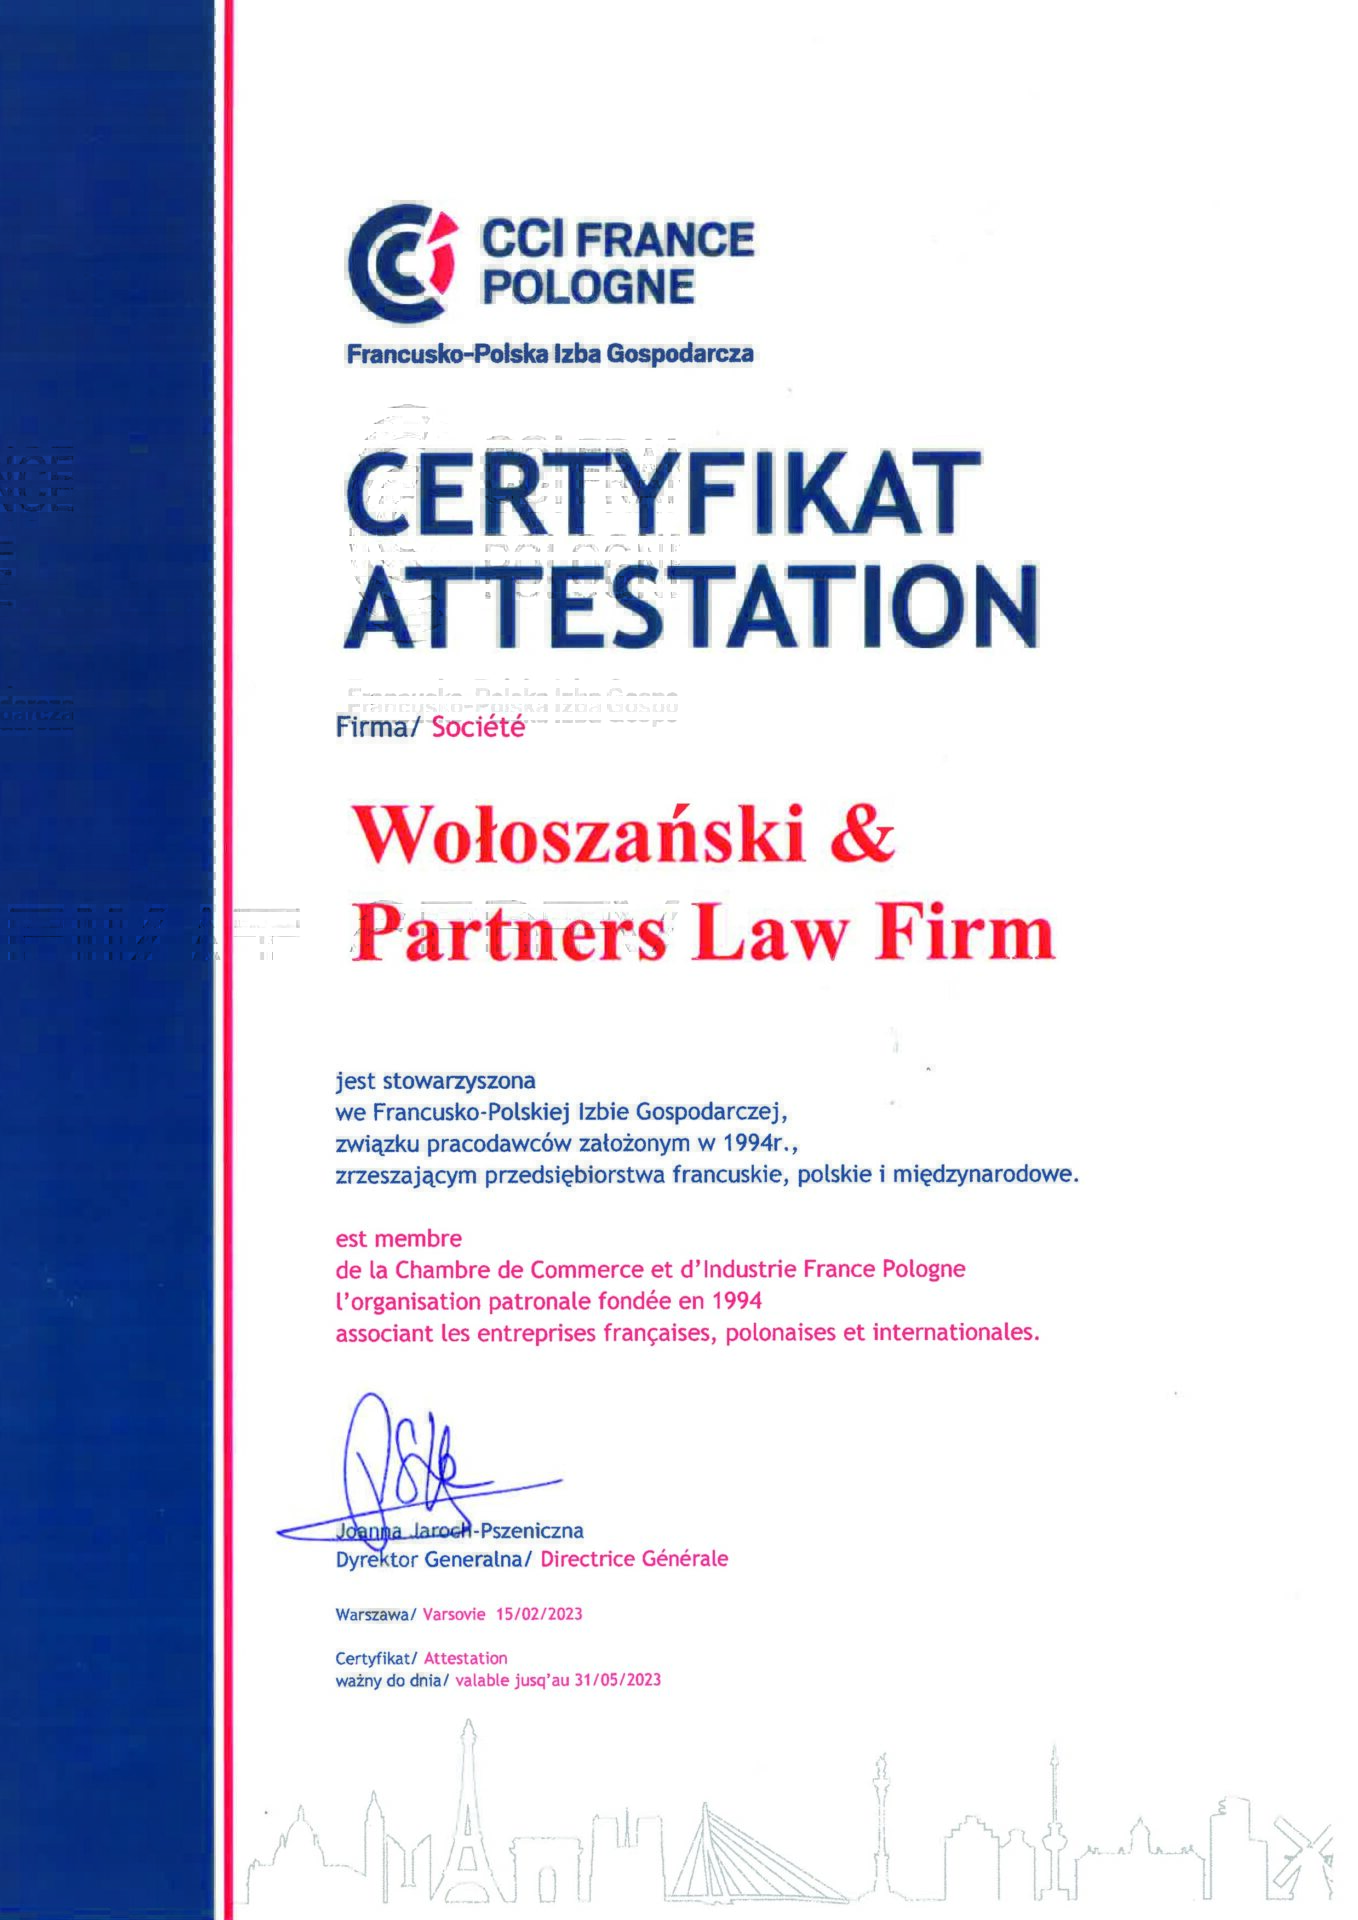 Wołoszański & Partners Certificate of membership at CCIFP